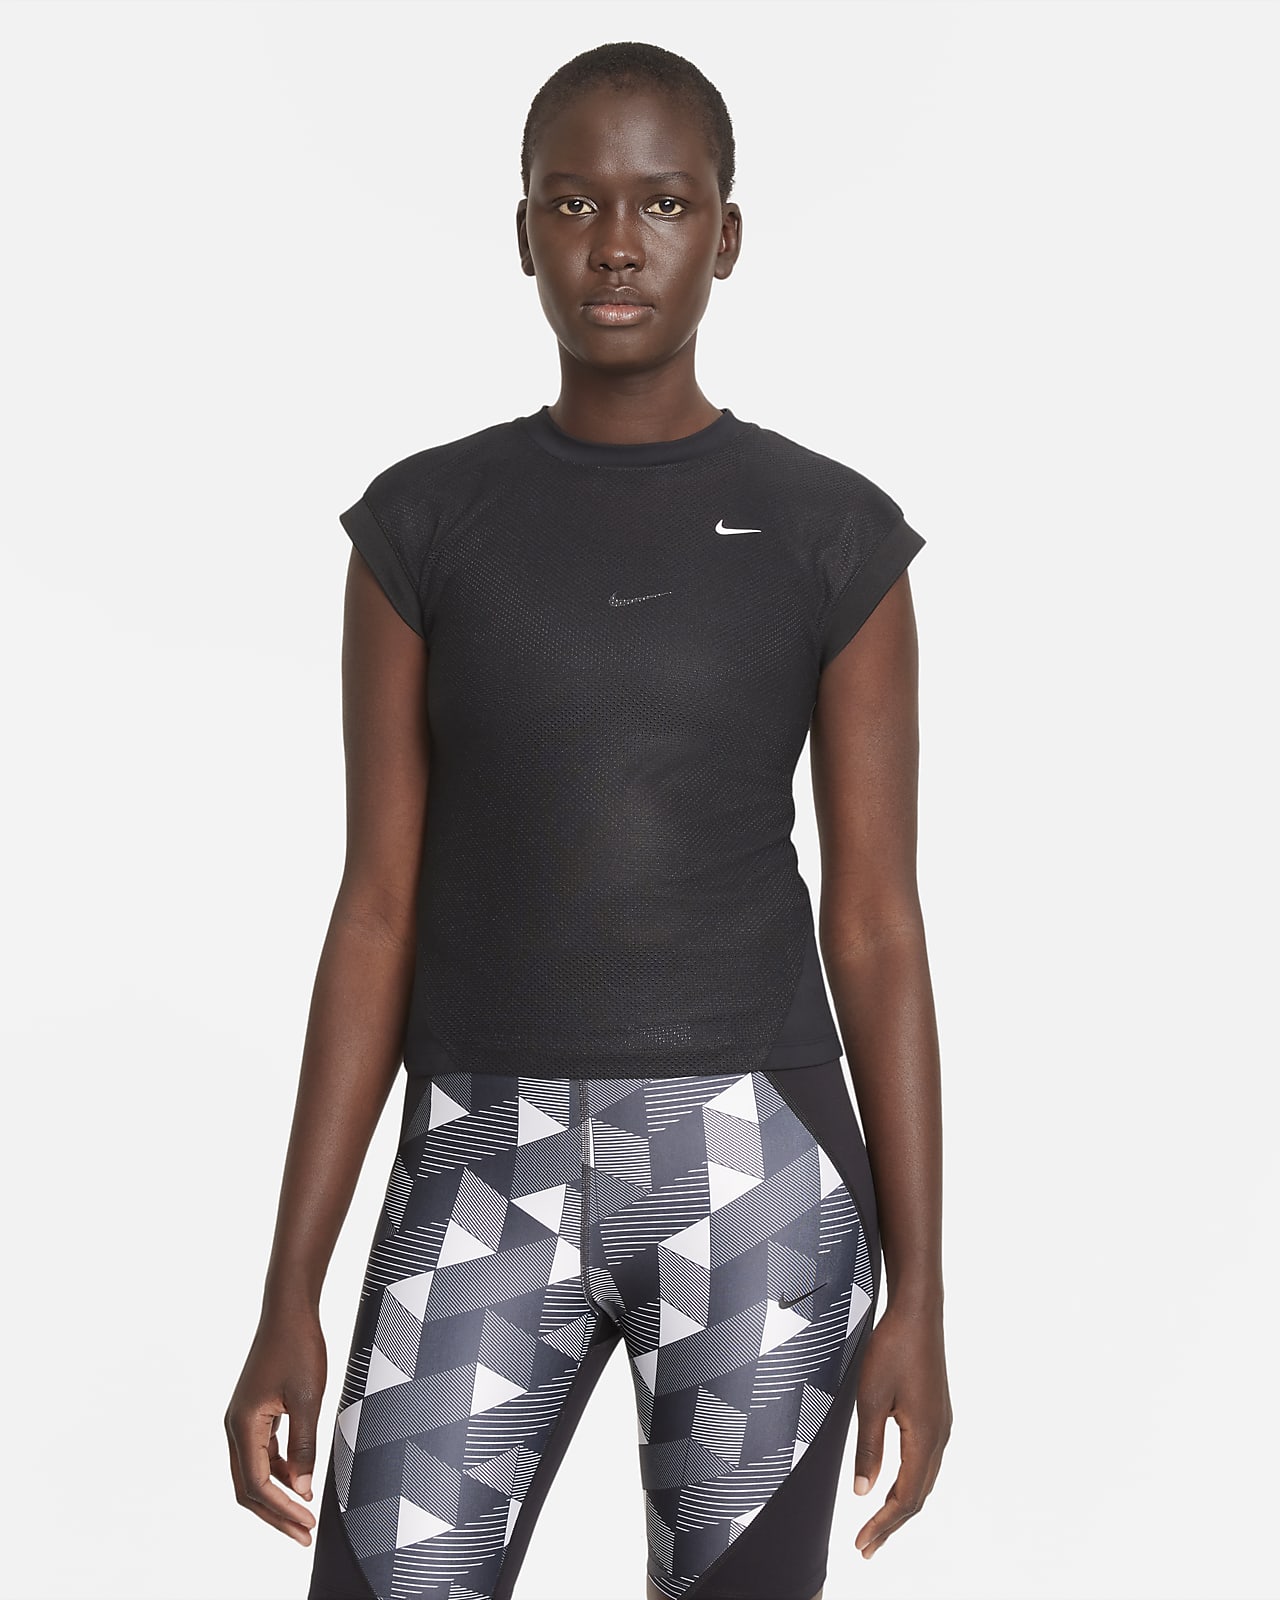 Serena Williams Design Crew Women's Short-Sleeve Nike.com